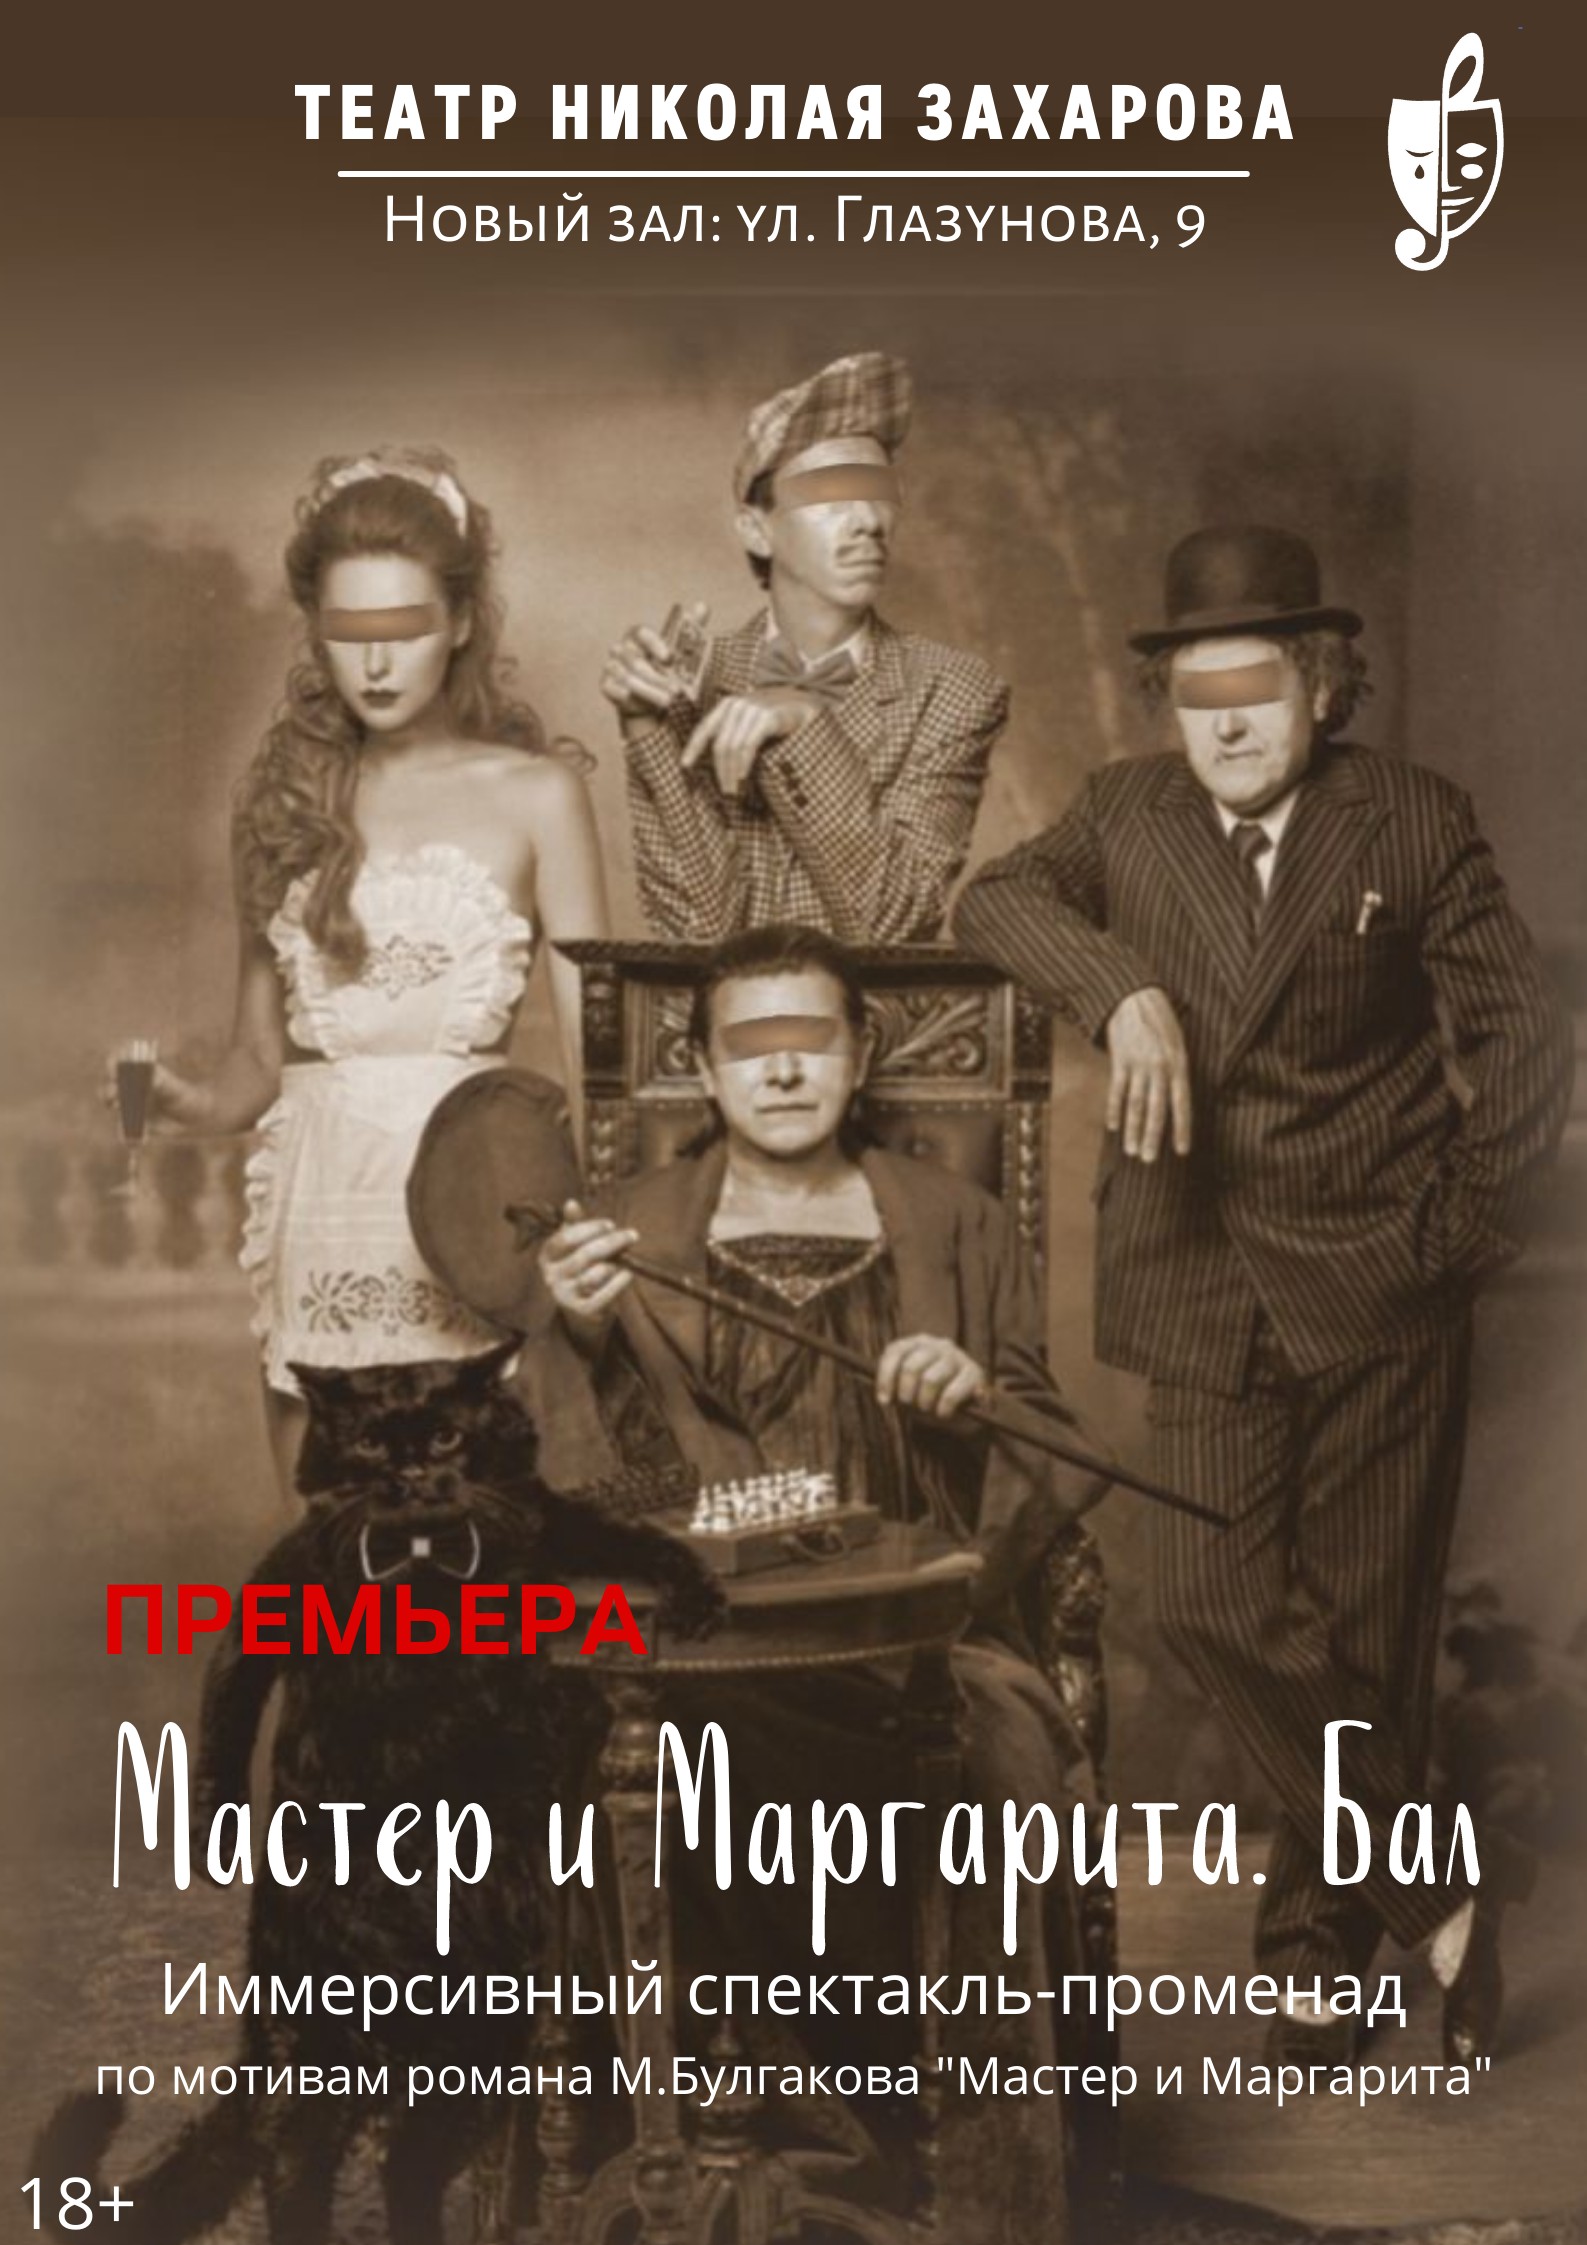 23 апреля, 19:00, 1300 руб.Театр Николая Захарова, ул. Глазунова, 9 